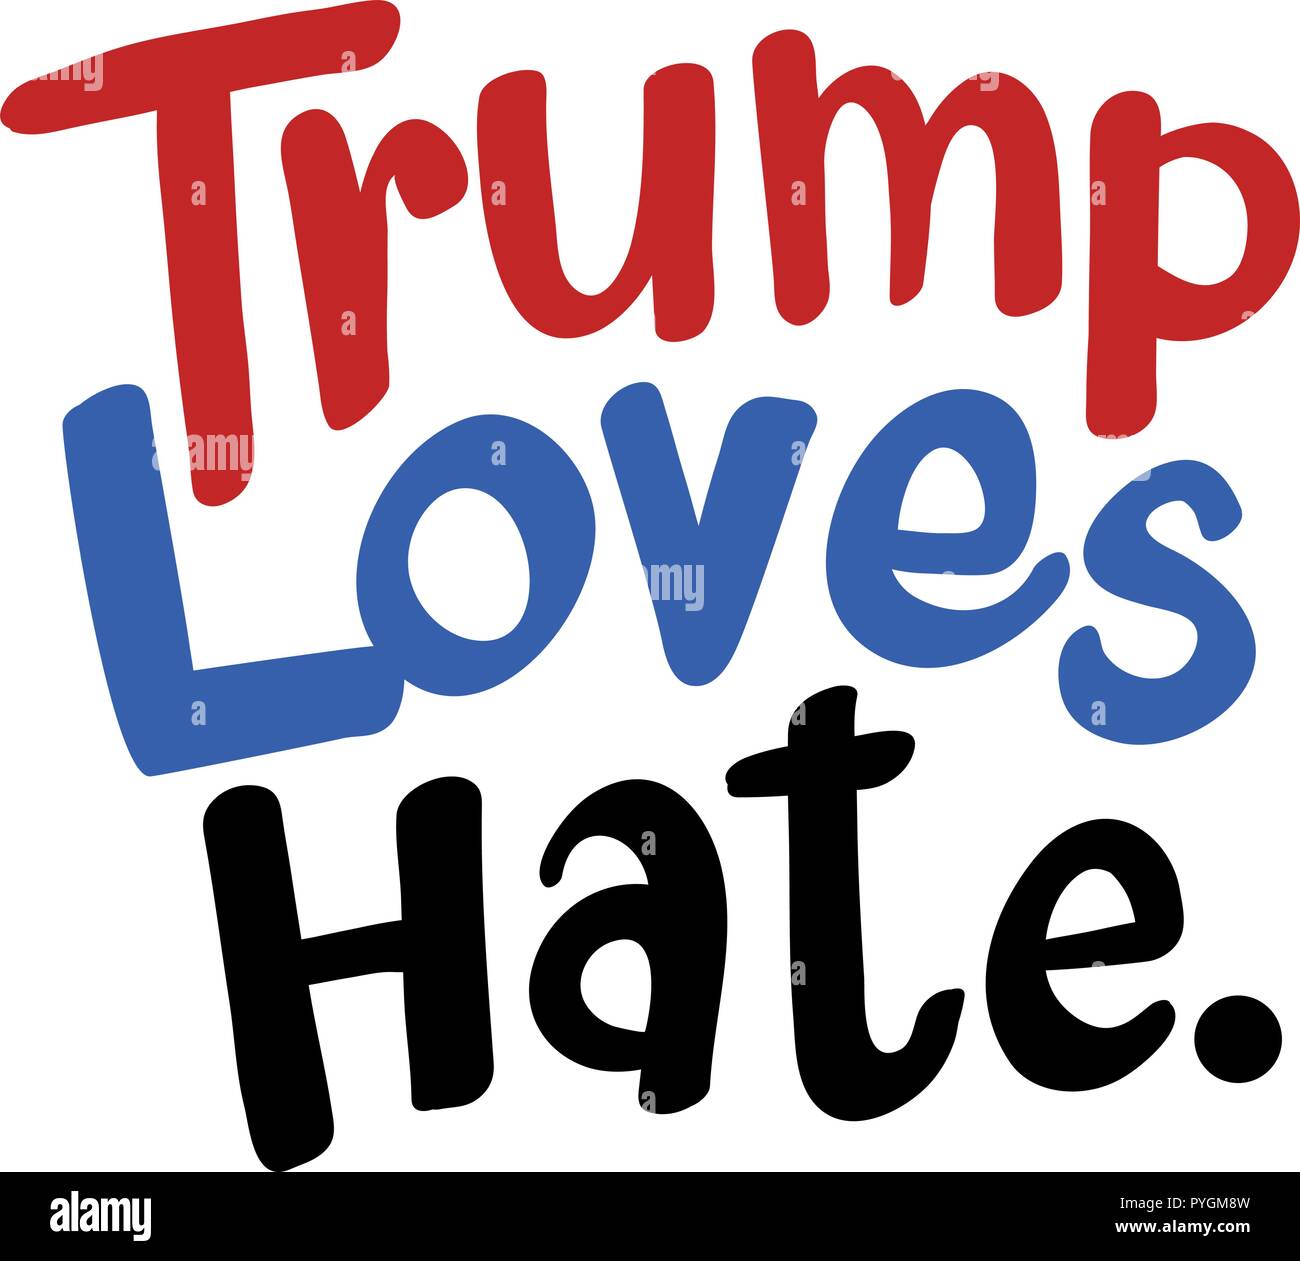 English phrase for Trump loves hat illustration Stock Vector